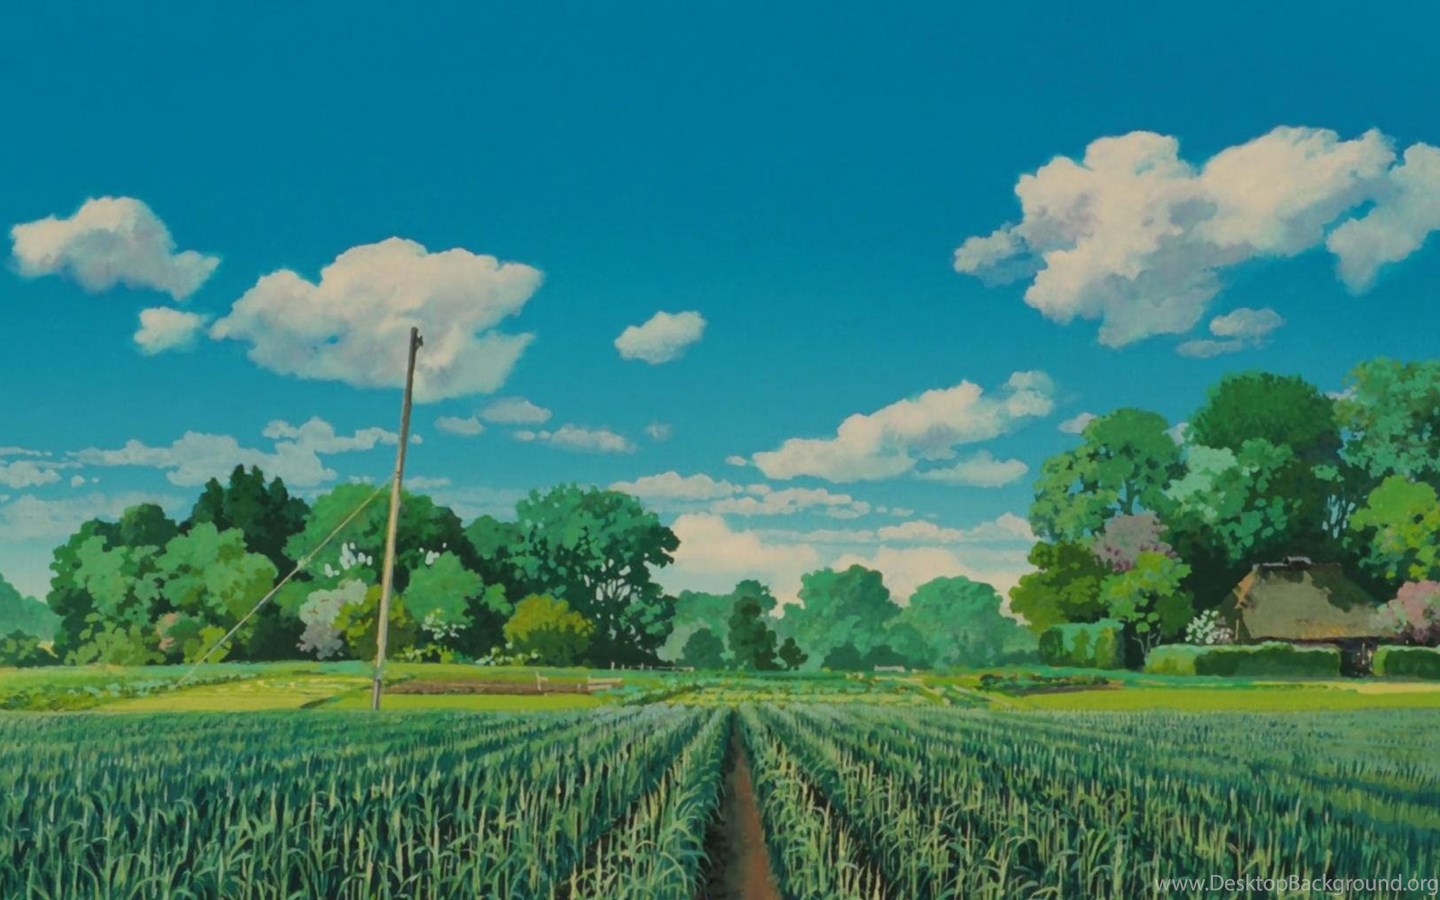 Studio Ghibli 4K Wallpapers